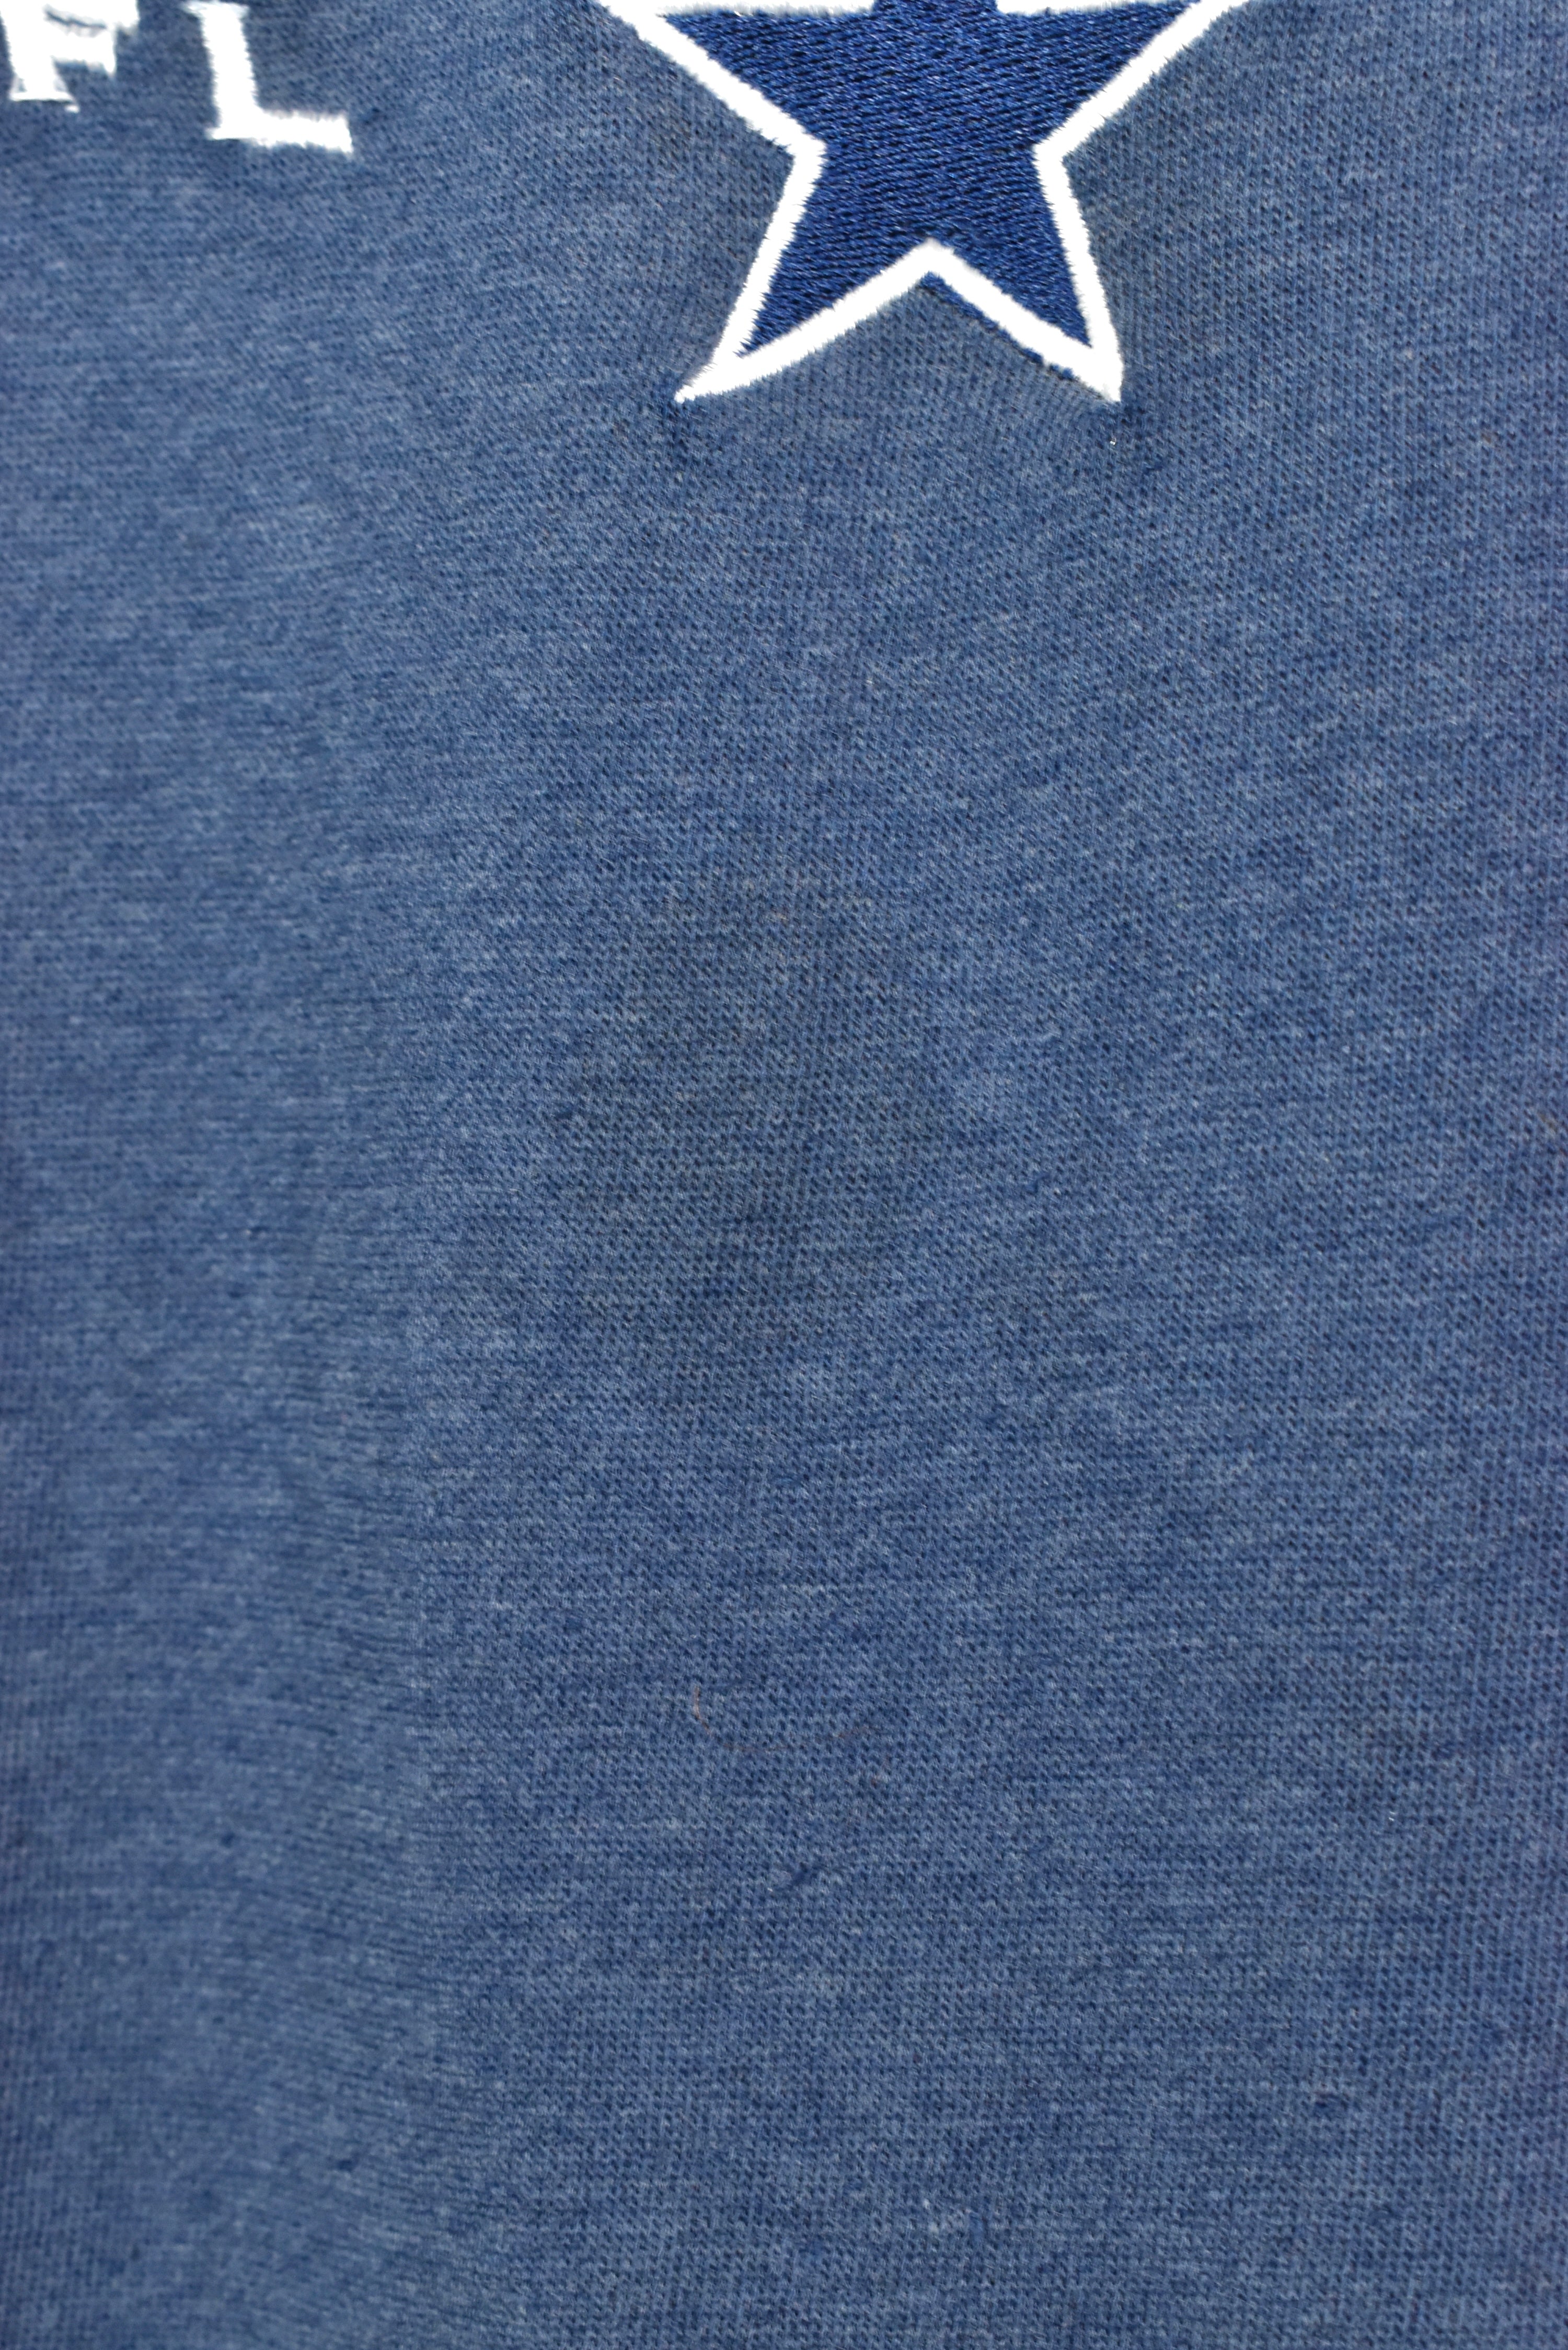 Vintage Dallas Cowboys sweatshirt, NFL navy blue embroidered crewneck - AU XXL PRO SPORT